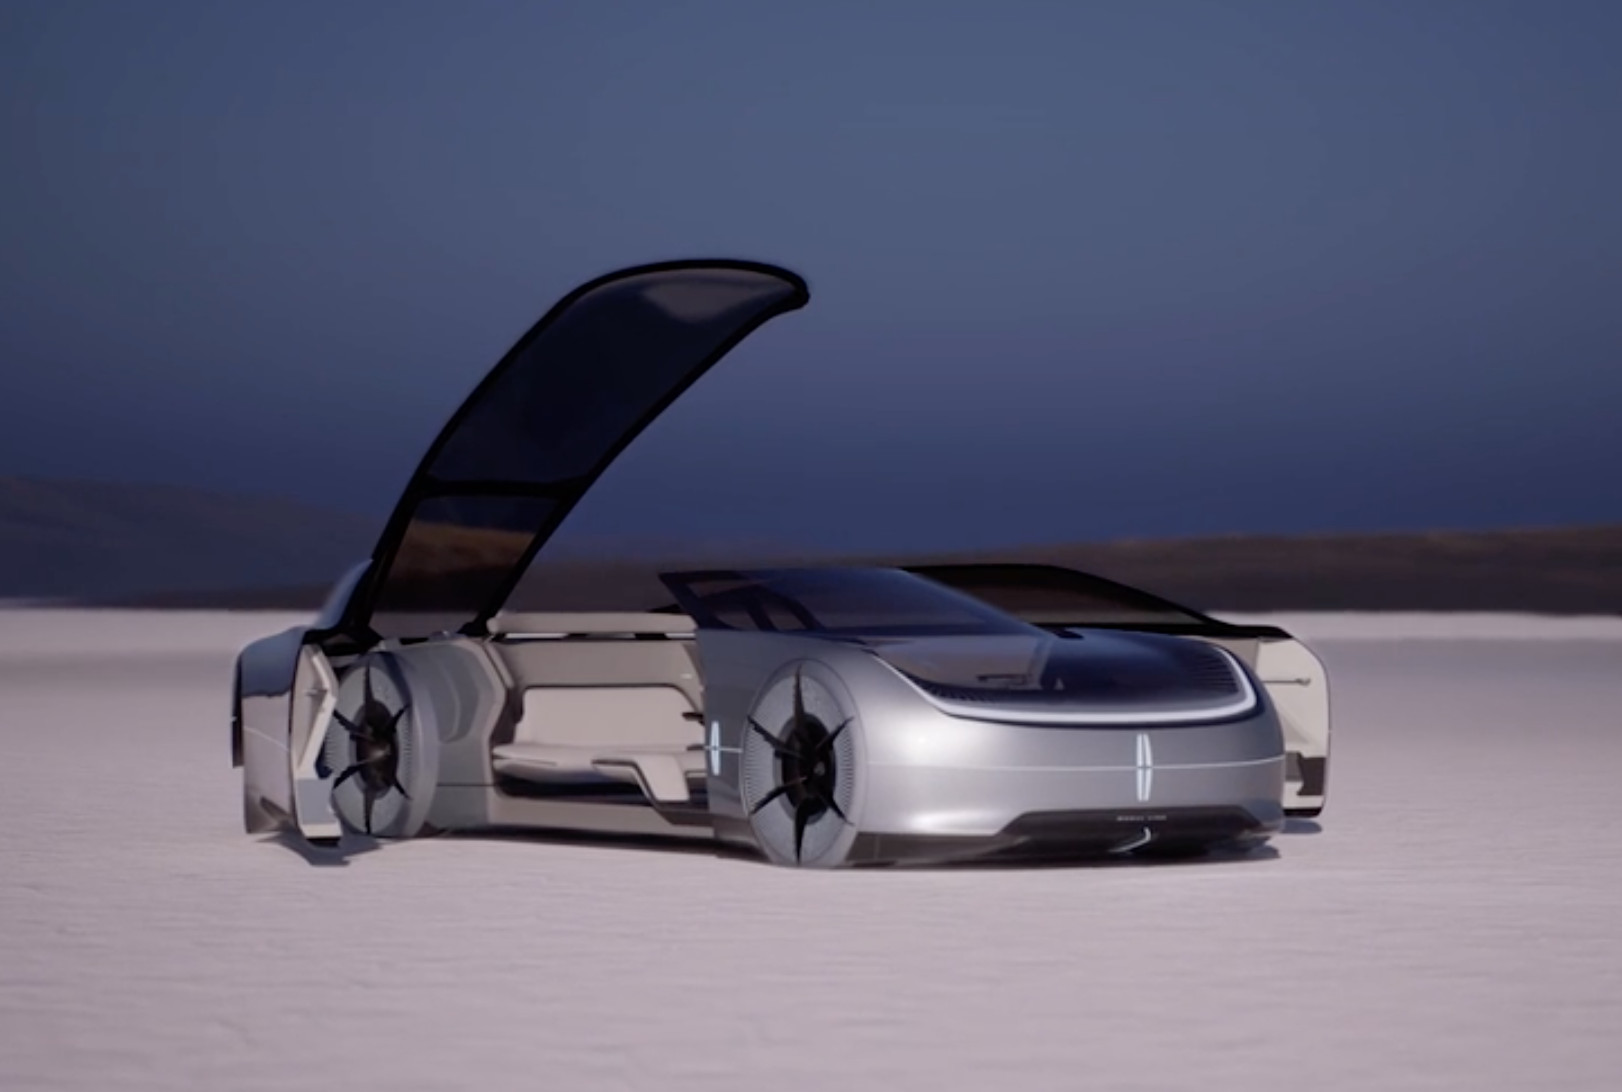 Lincoln L100 Concept, Acura ZDX, Porsche hydrogen engine: Today’s Car News Auto Recent